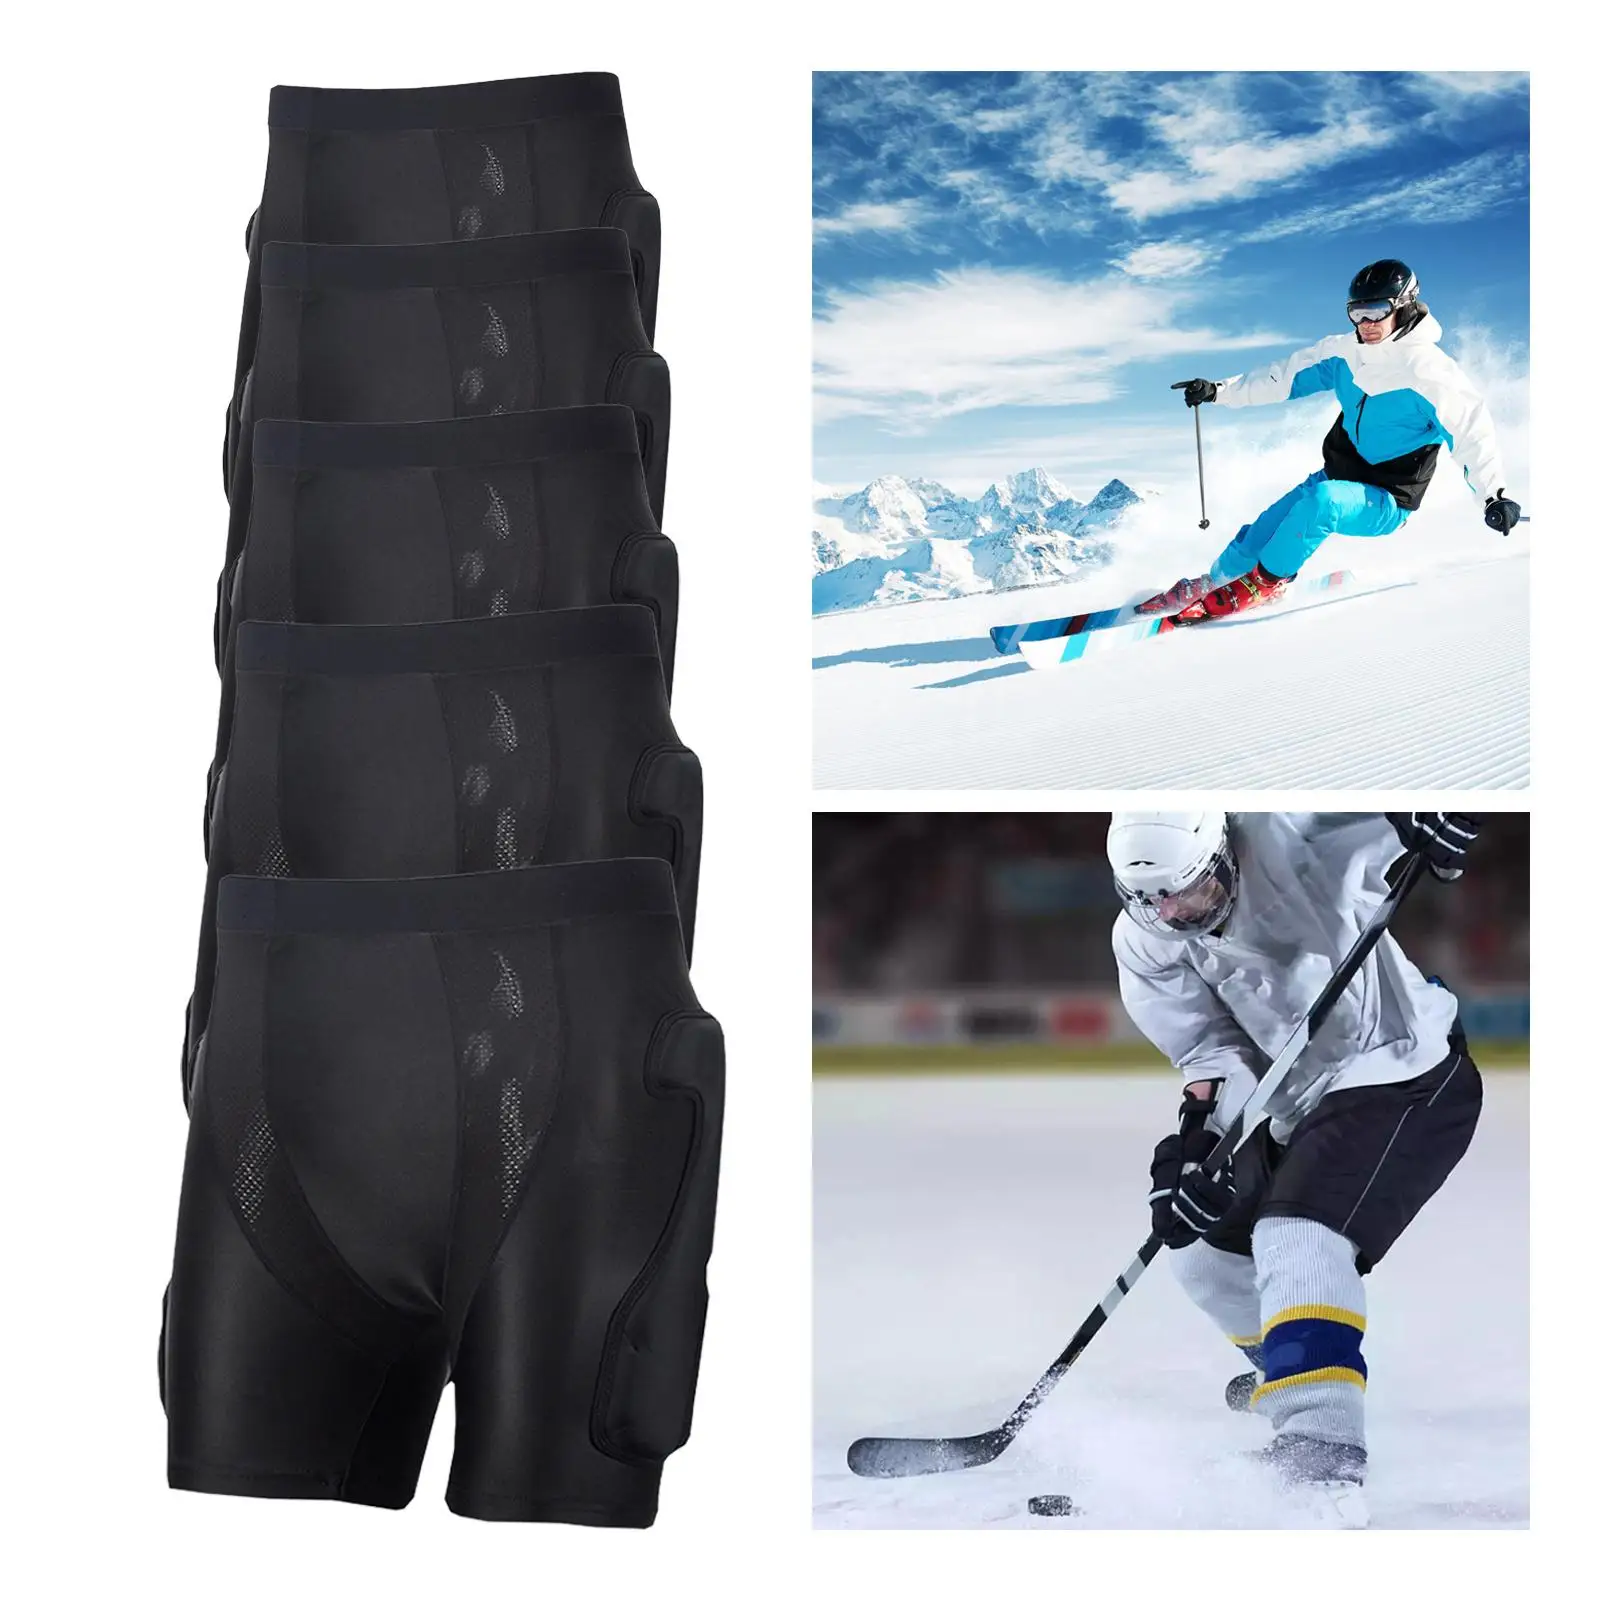 Protective Padded Shorts Sports Ski Hip Pad Protective Gear 3D Protection for Skating Snowboard Skateboard Winter Sports Skiing